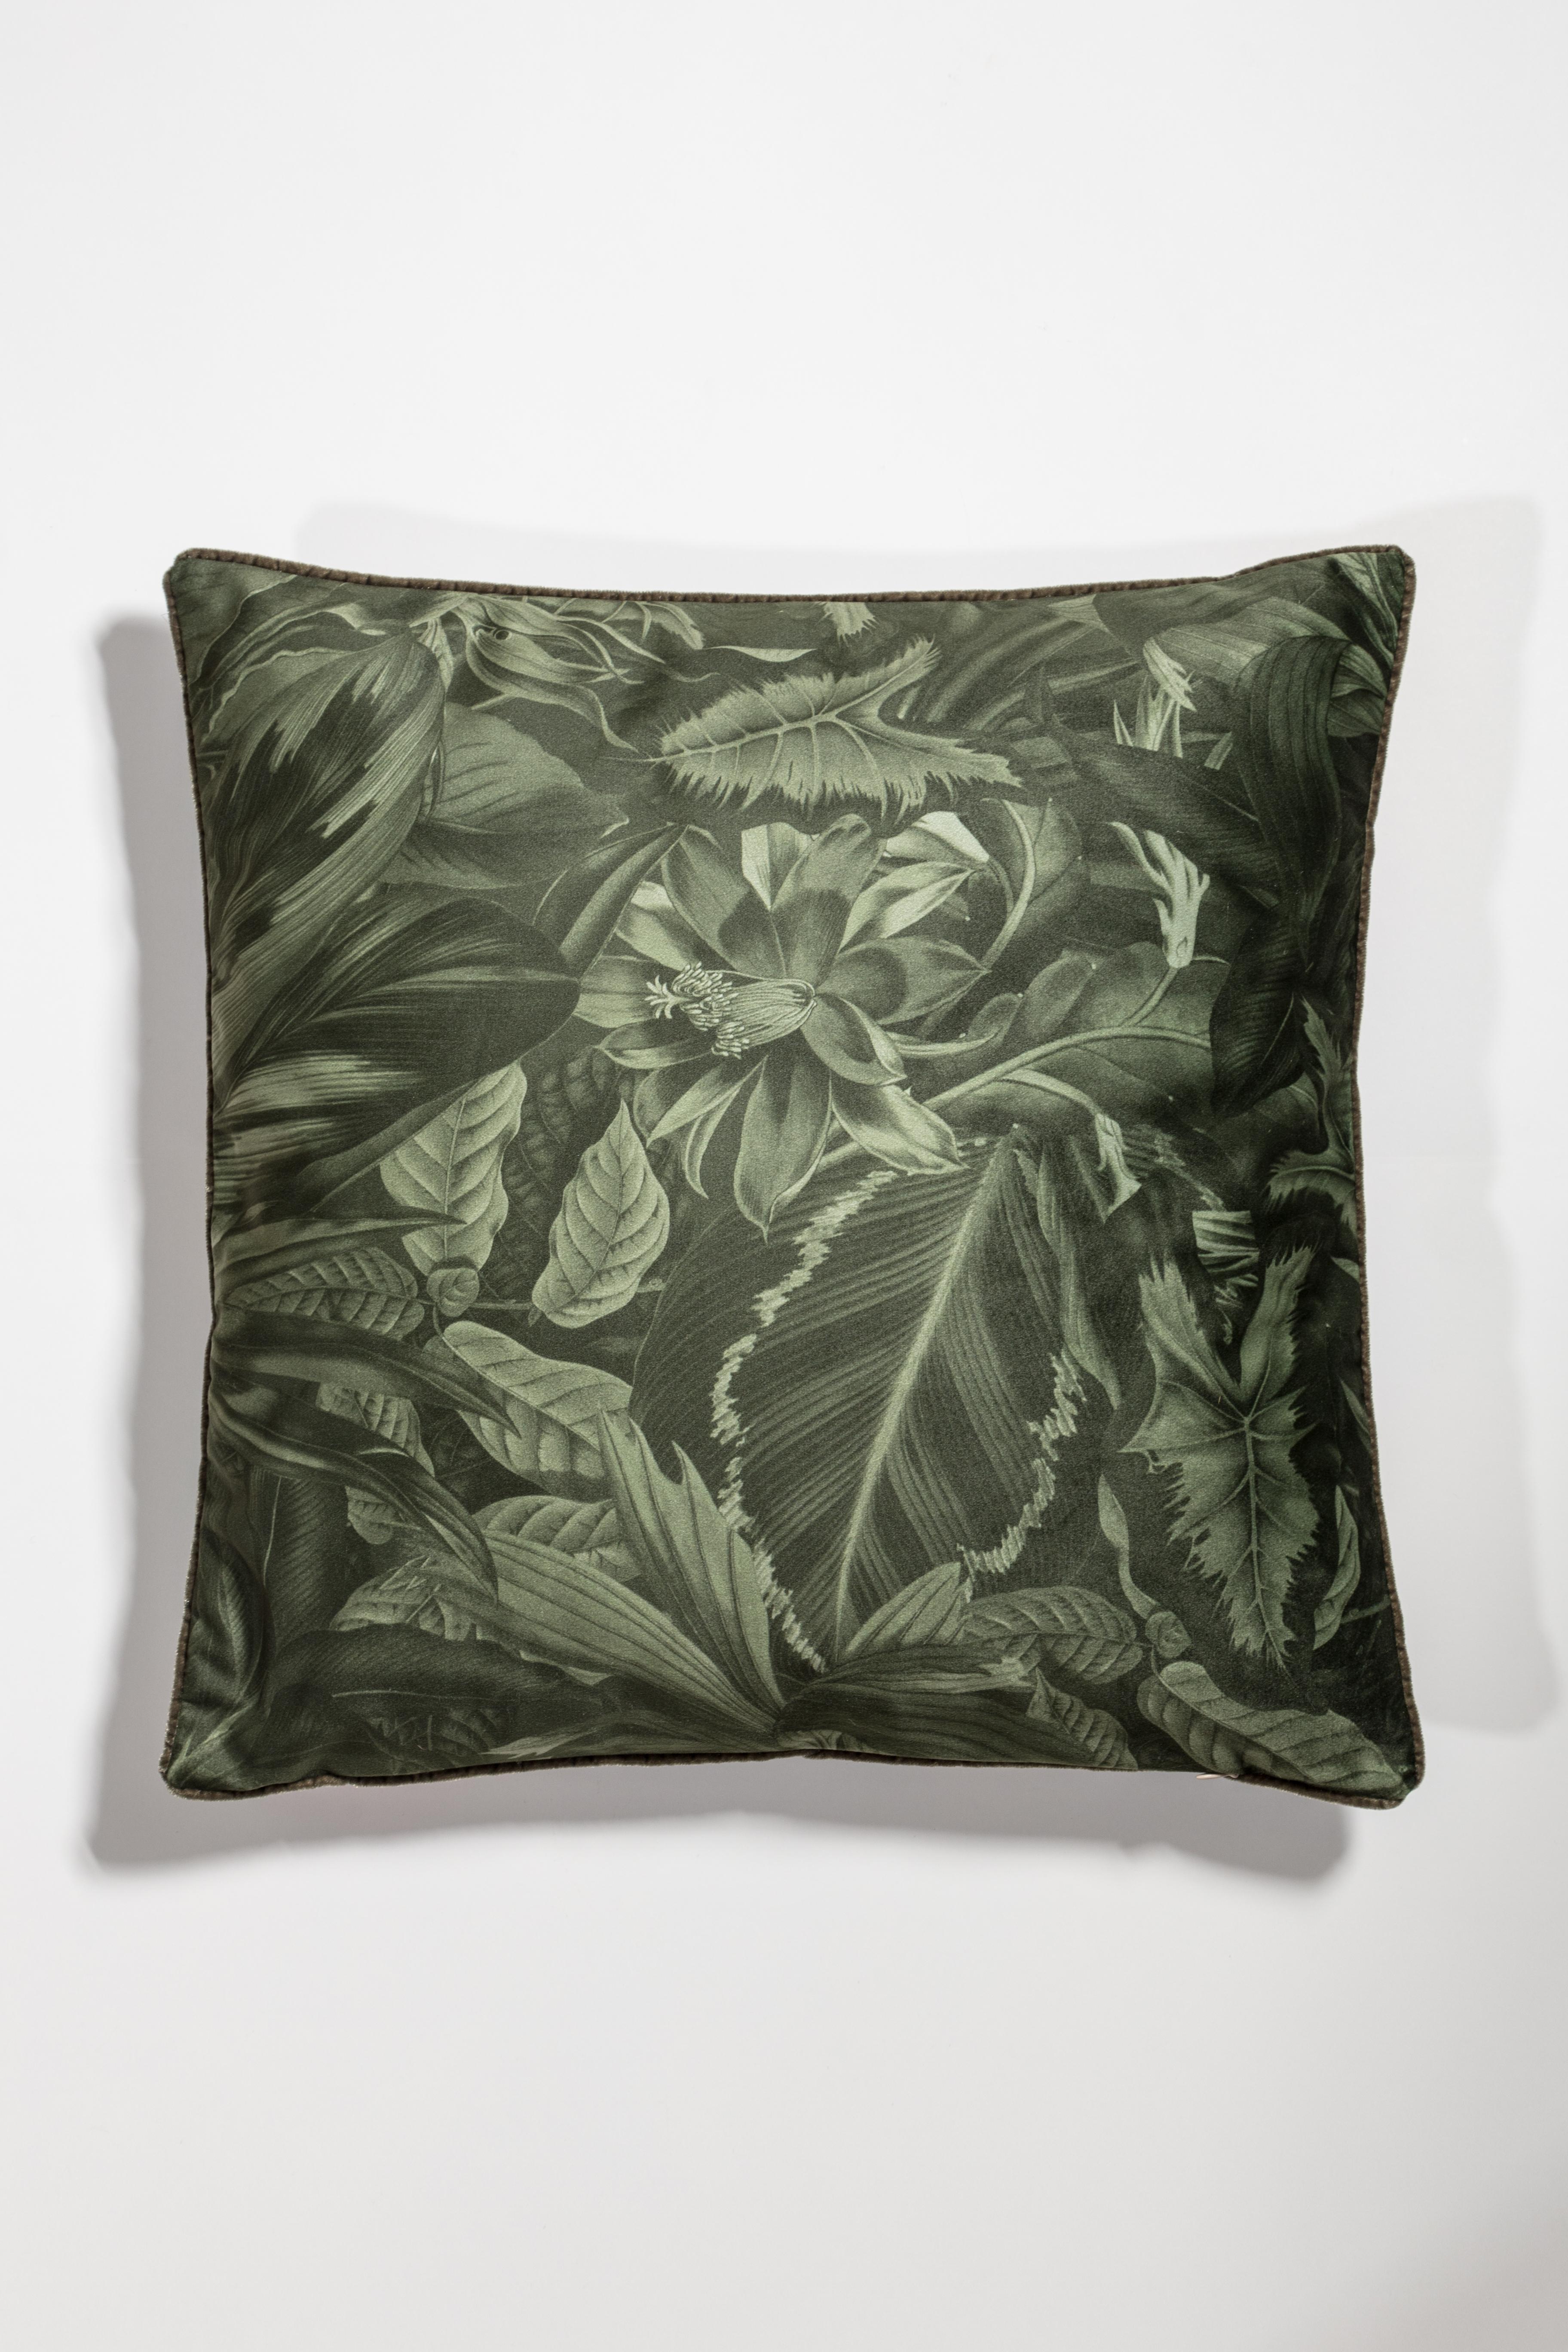 Animalia, Contemporary Velvet Printed Pillows by Vito Nesta For Sale 4